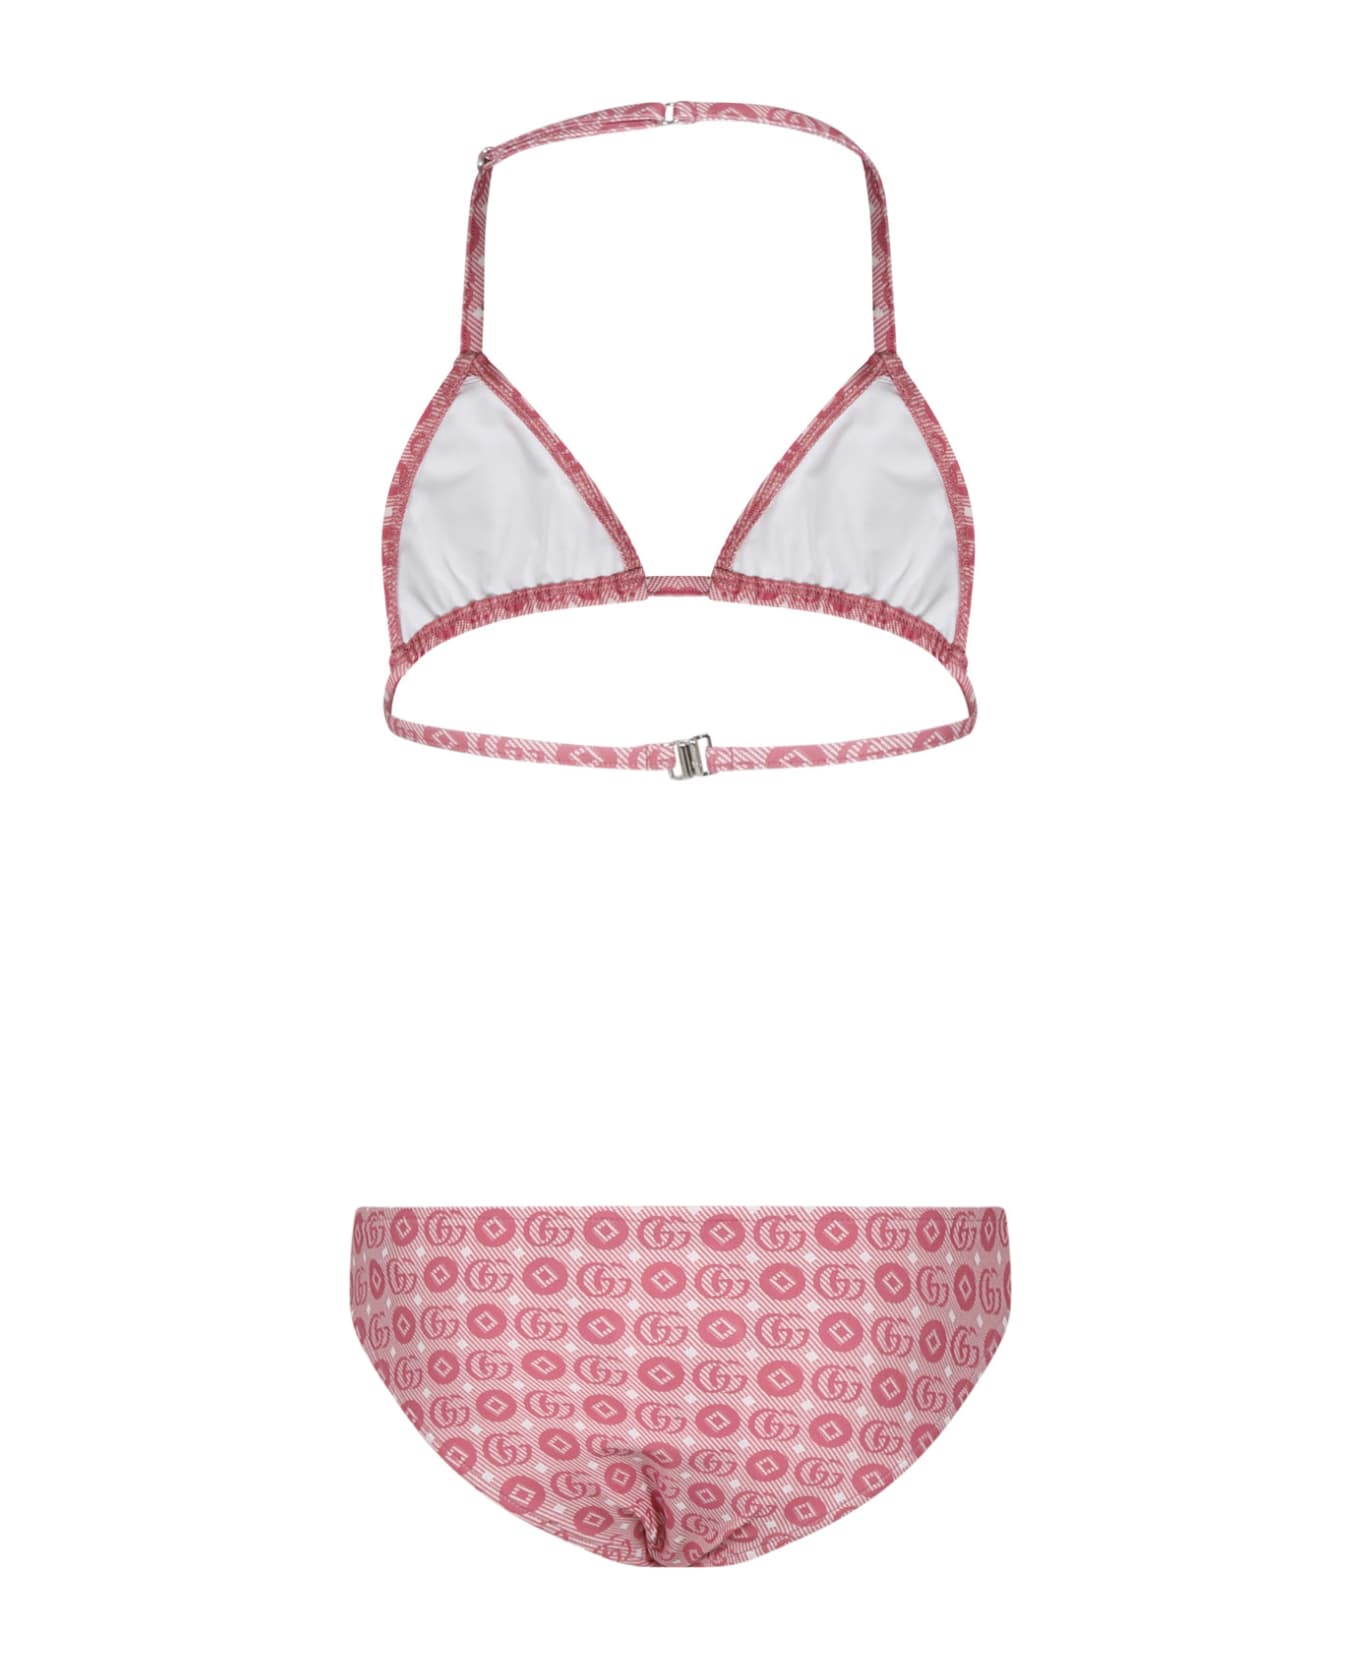 Gucci Pink Bikini For Girl With A Double G Geometric Motif - Rosa